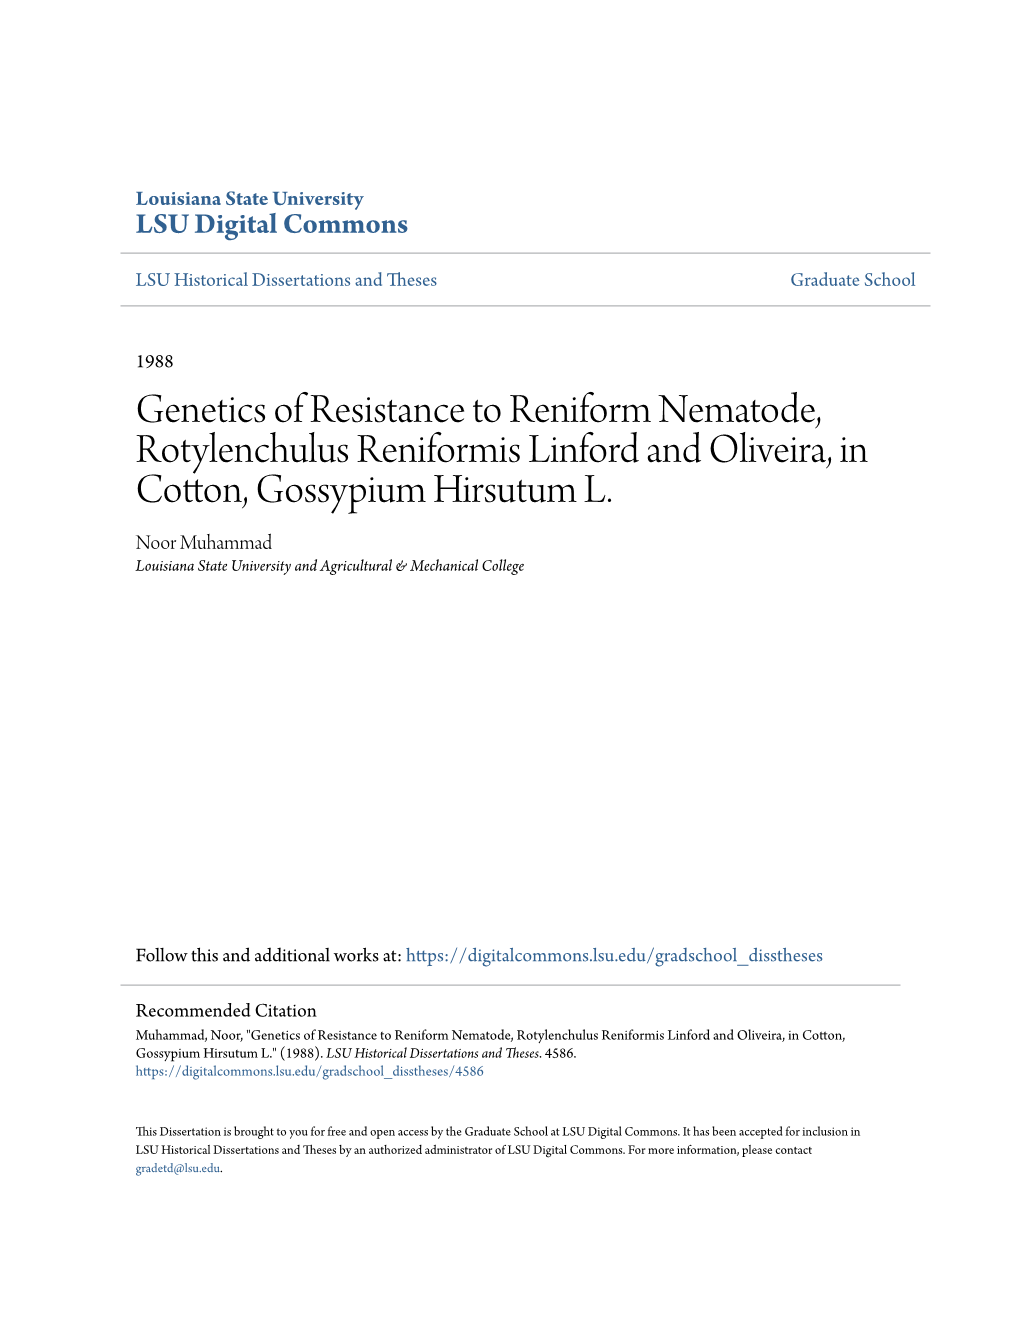 Genetics of Resistance to Reniform Nematode, Rotylenchulus Reniformis Linford and Oliveira, in Cotton, Gossypium Hirsutum L